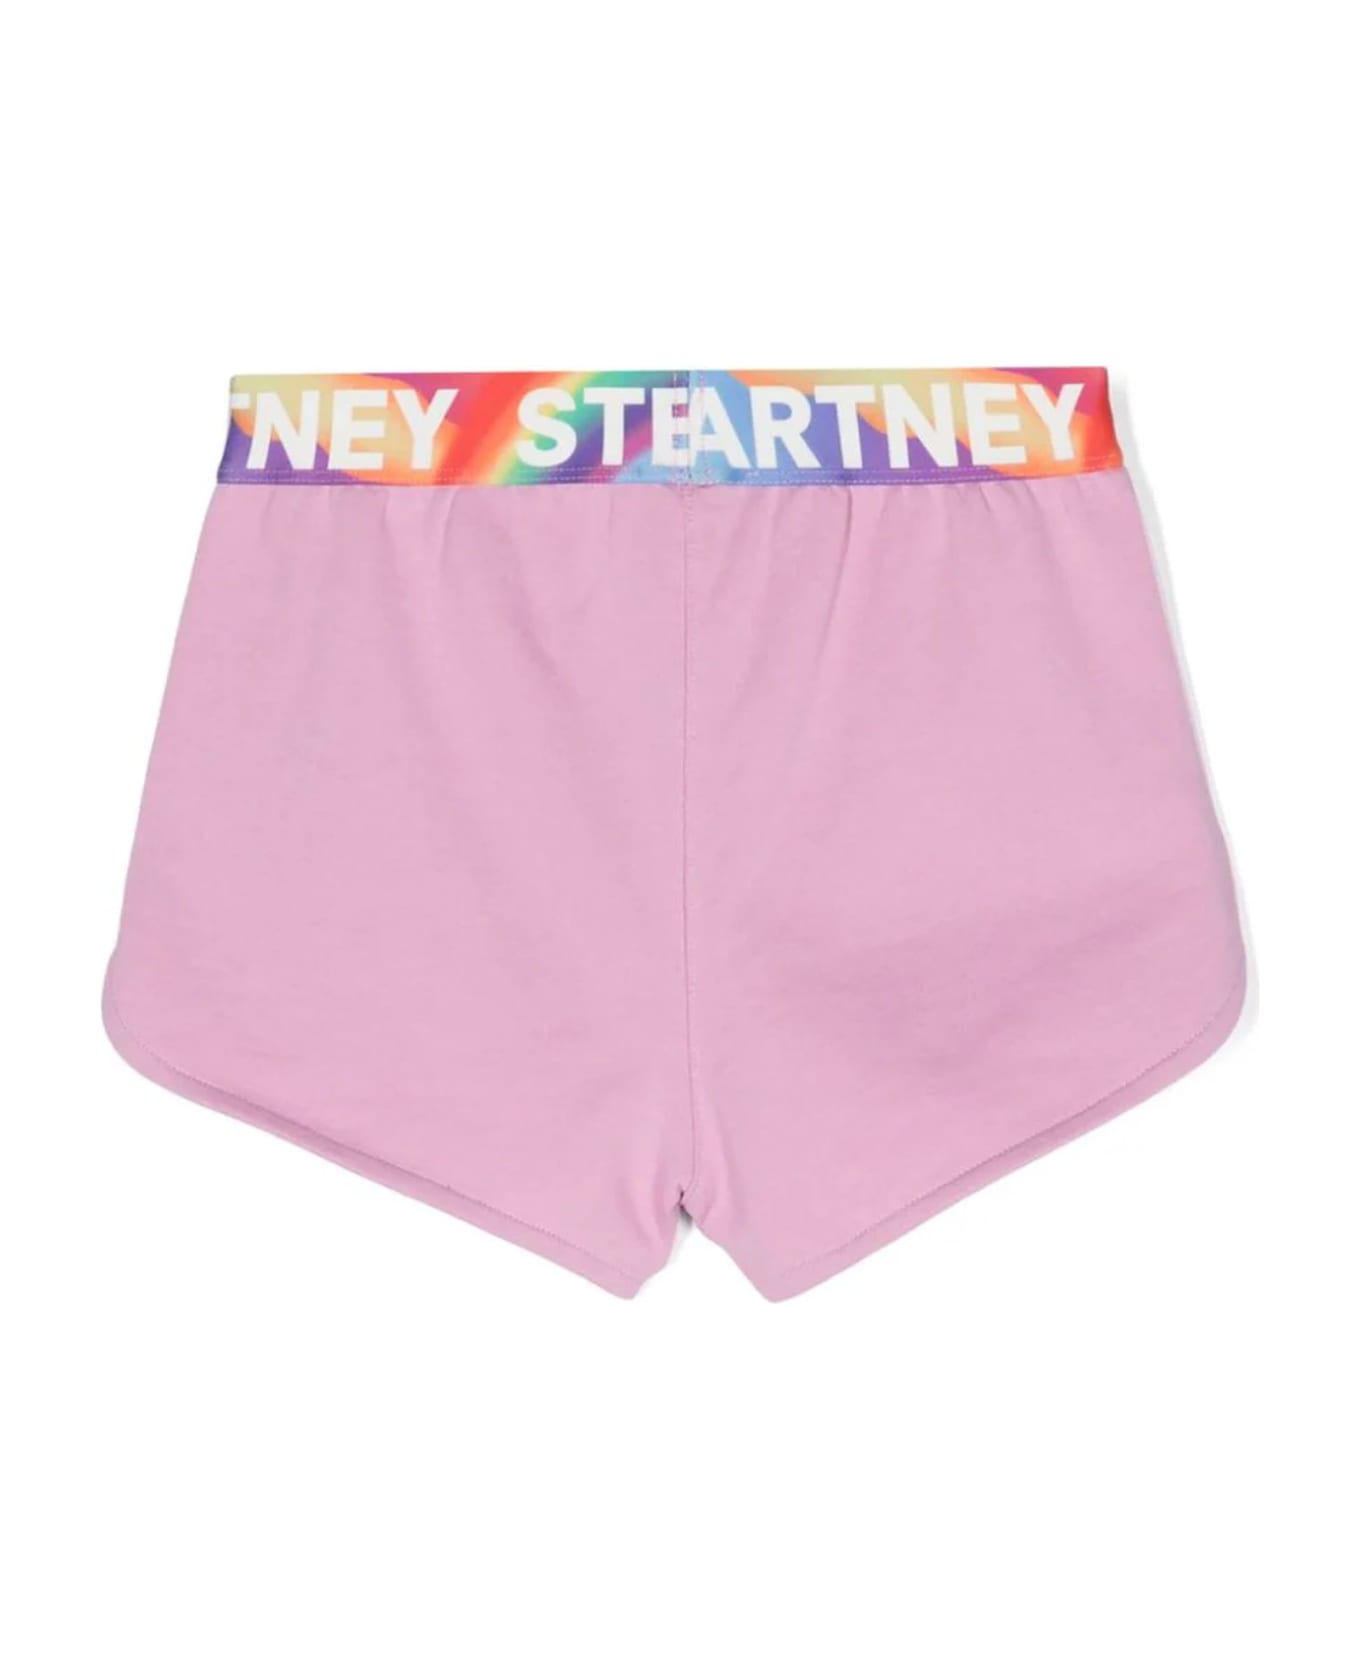 Stella McCartney Pink Cotton Shorts - Rosa ボトムス